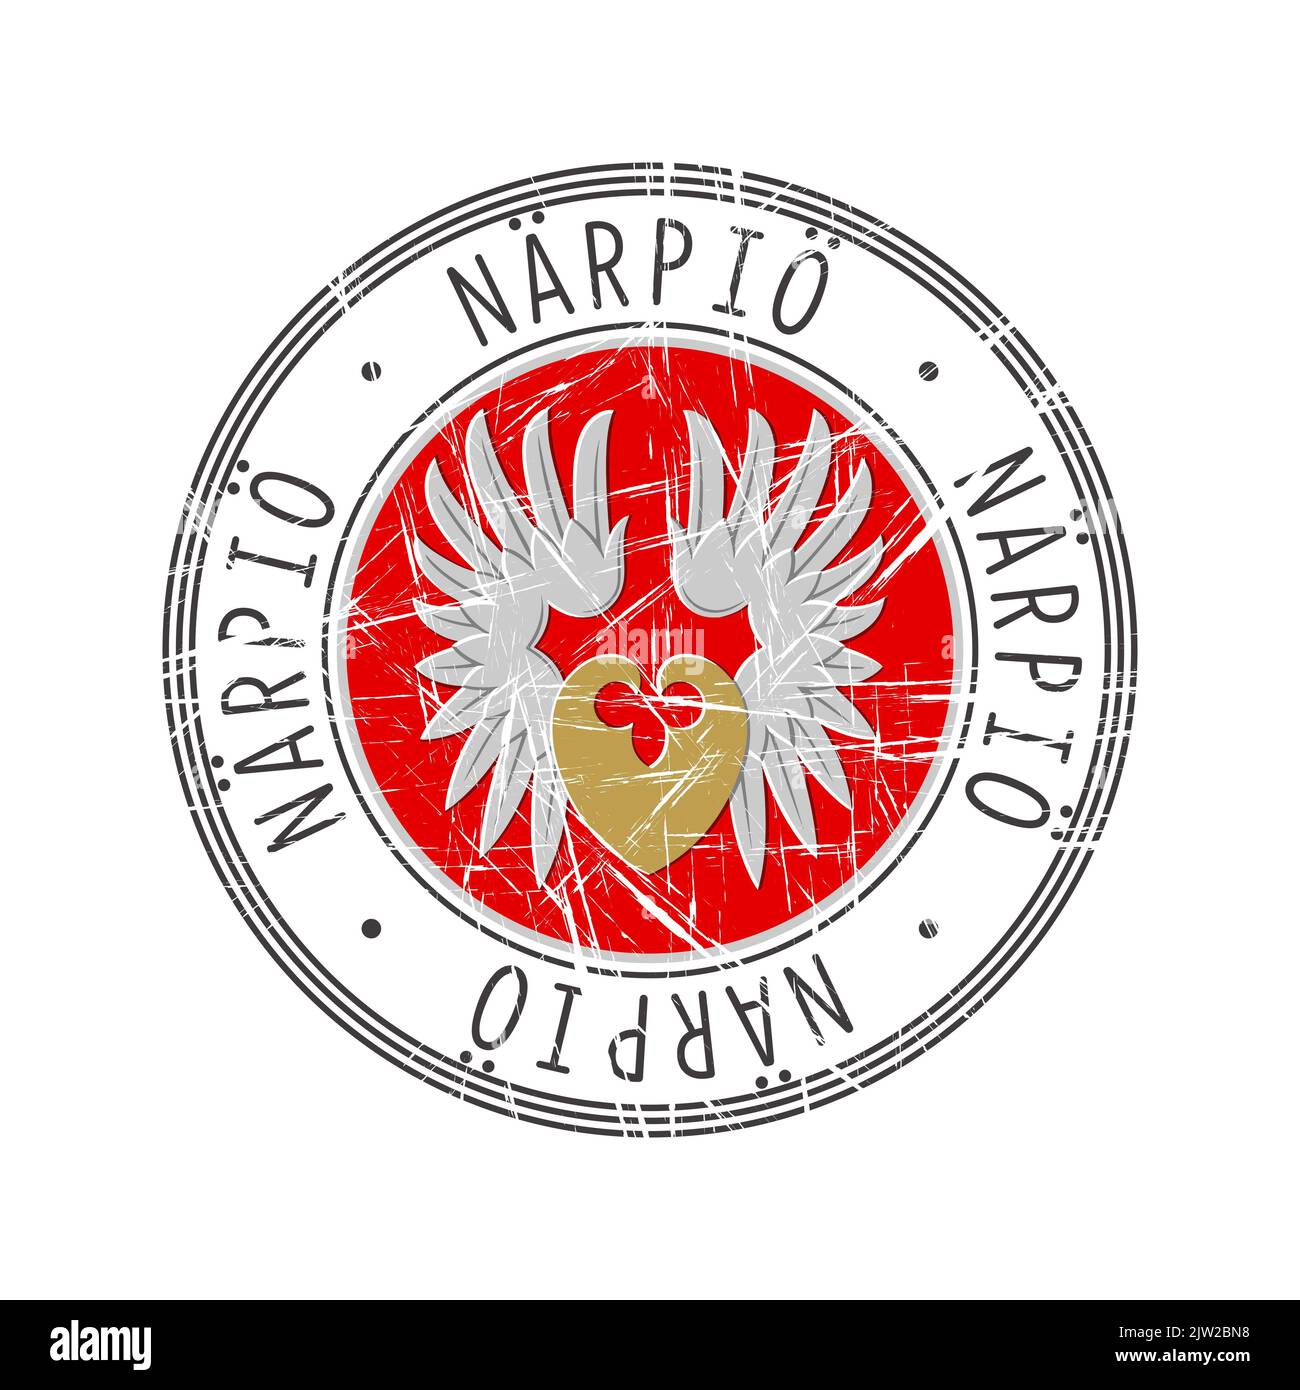 Narpio city, Finland. Grunge postal rubber stamp over white background Stock Photo